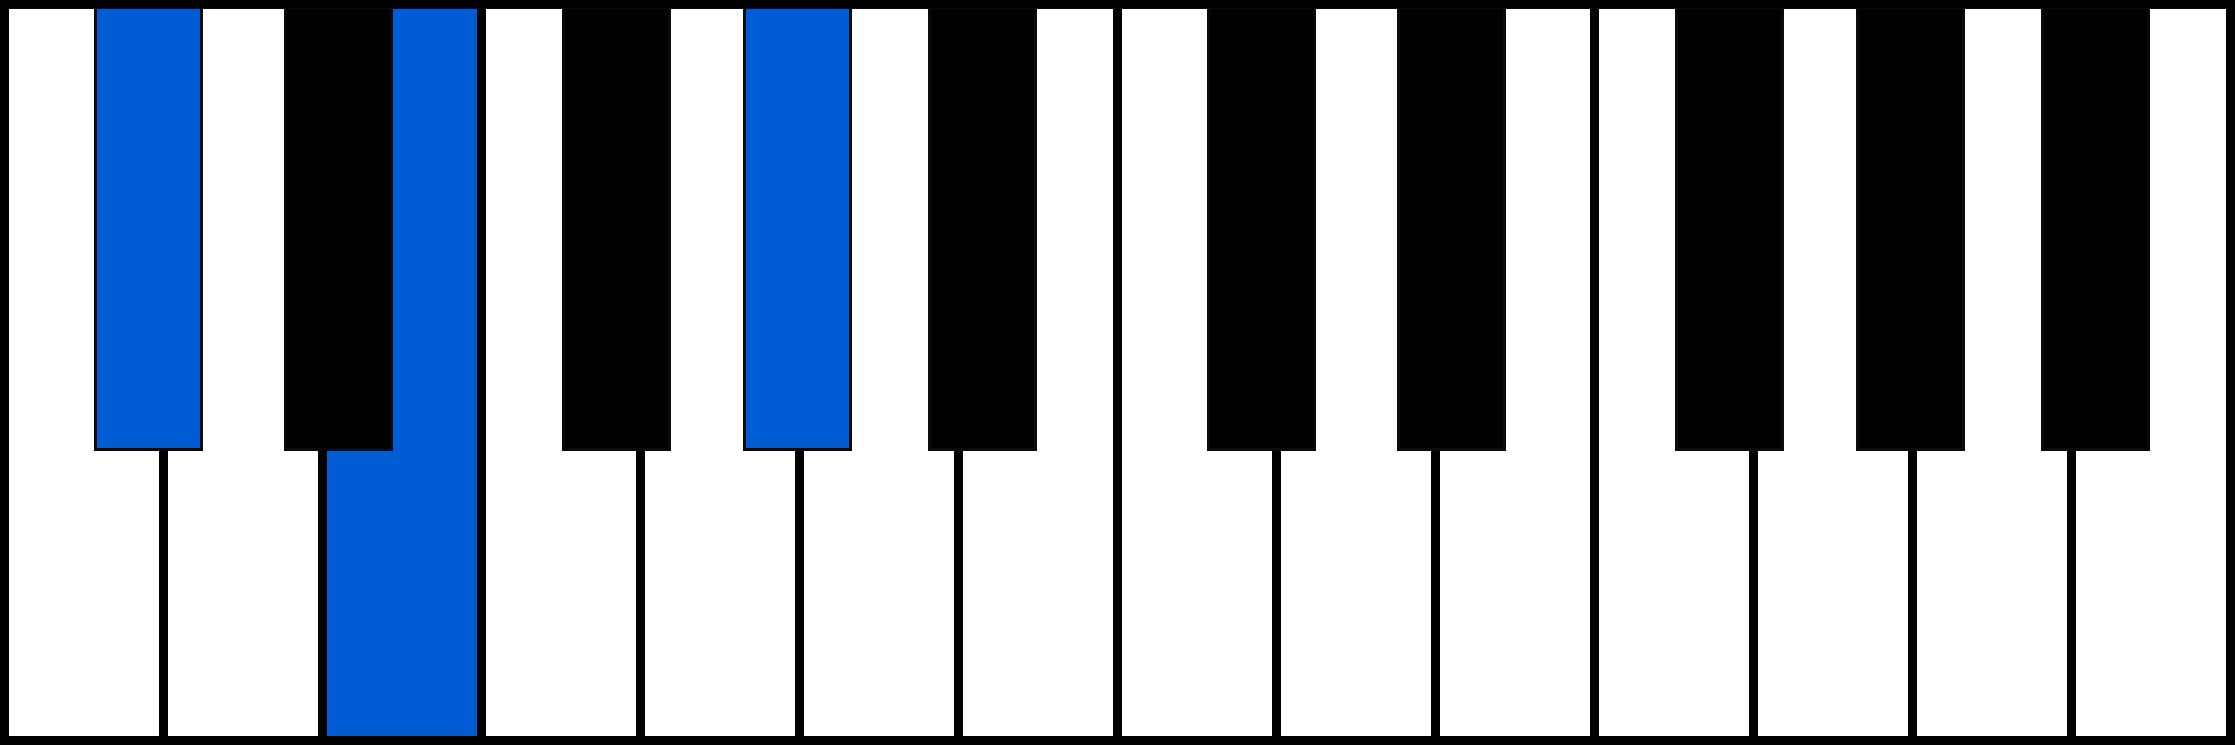 C#m piano chord fingering